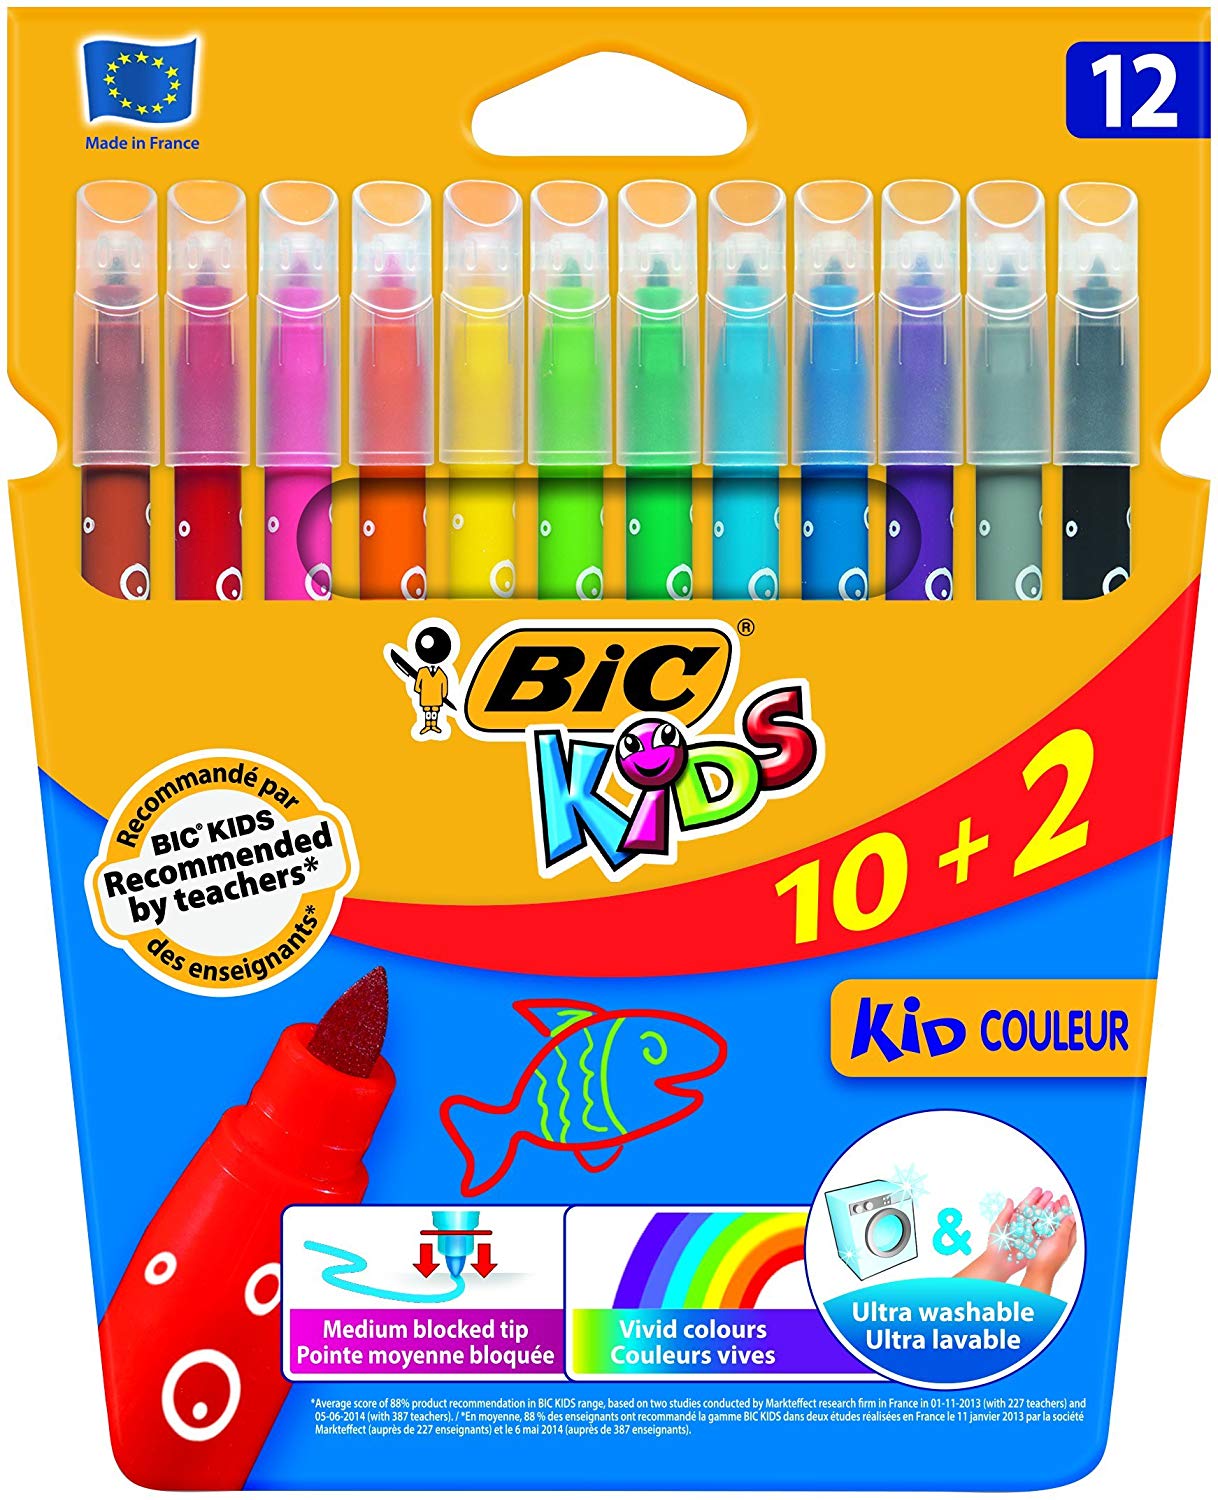 12 rotuladores BIC Kids Kid solo 1,7€